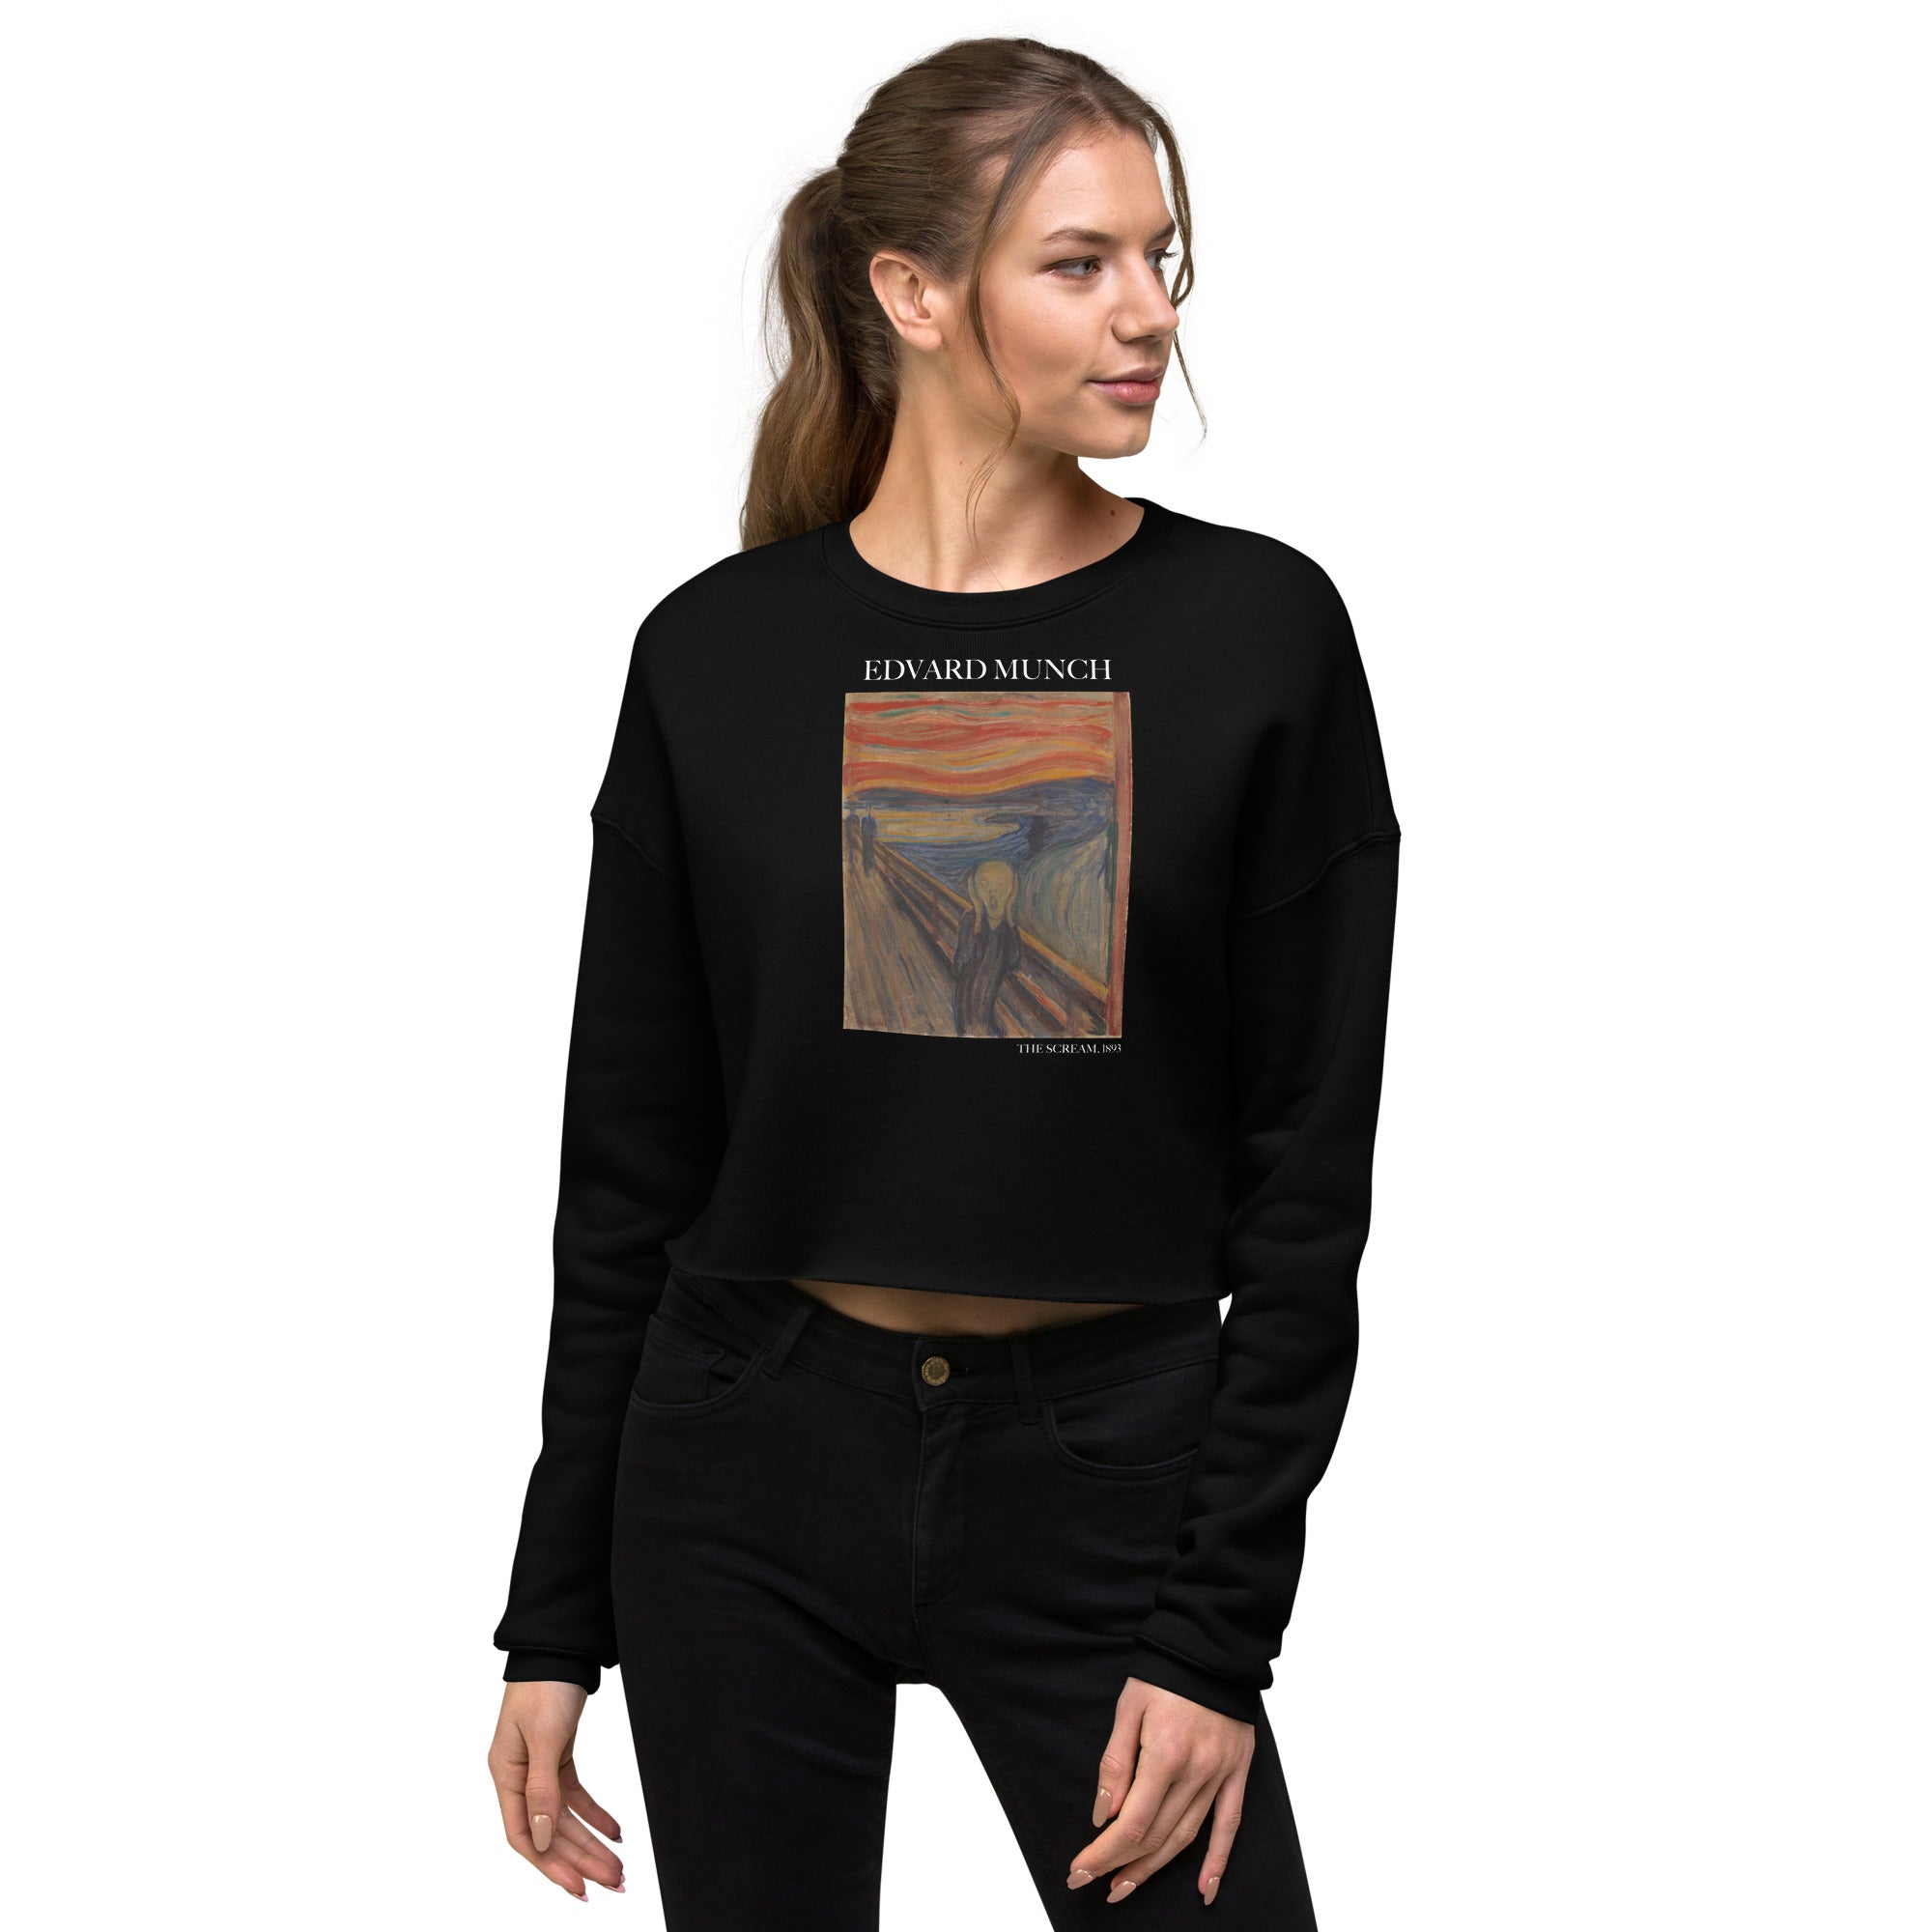 Edvard Munch 'The Scream' Famous Painting Cropped Sweatshirt | Premium Art Cropped Sweatshirt